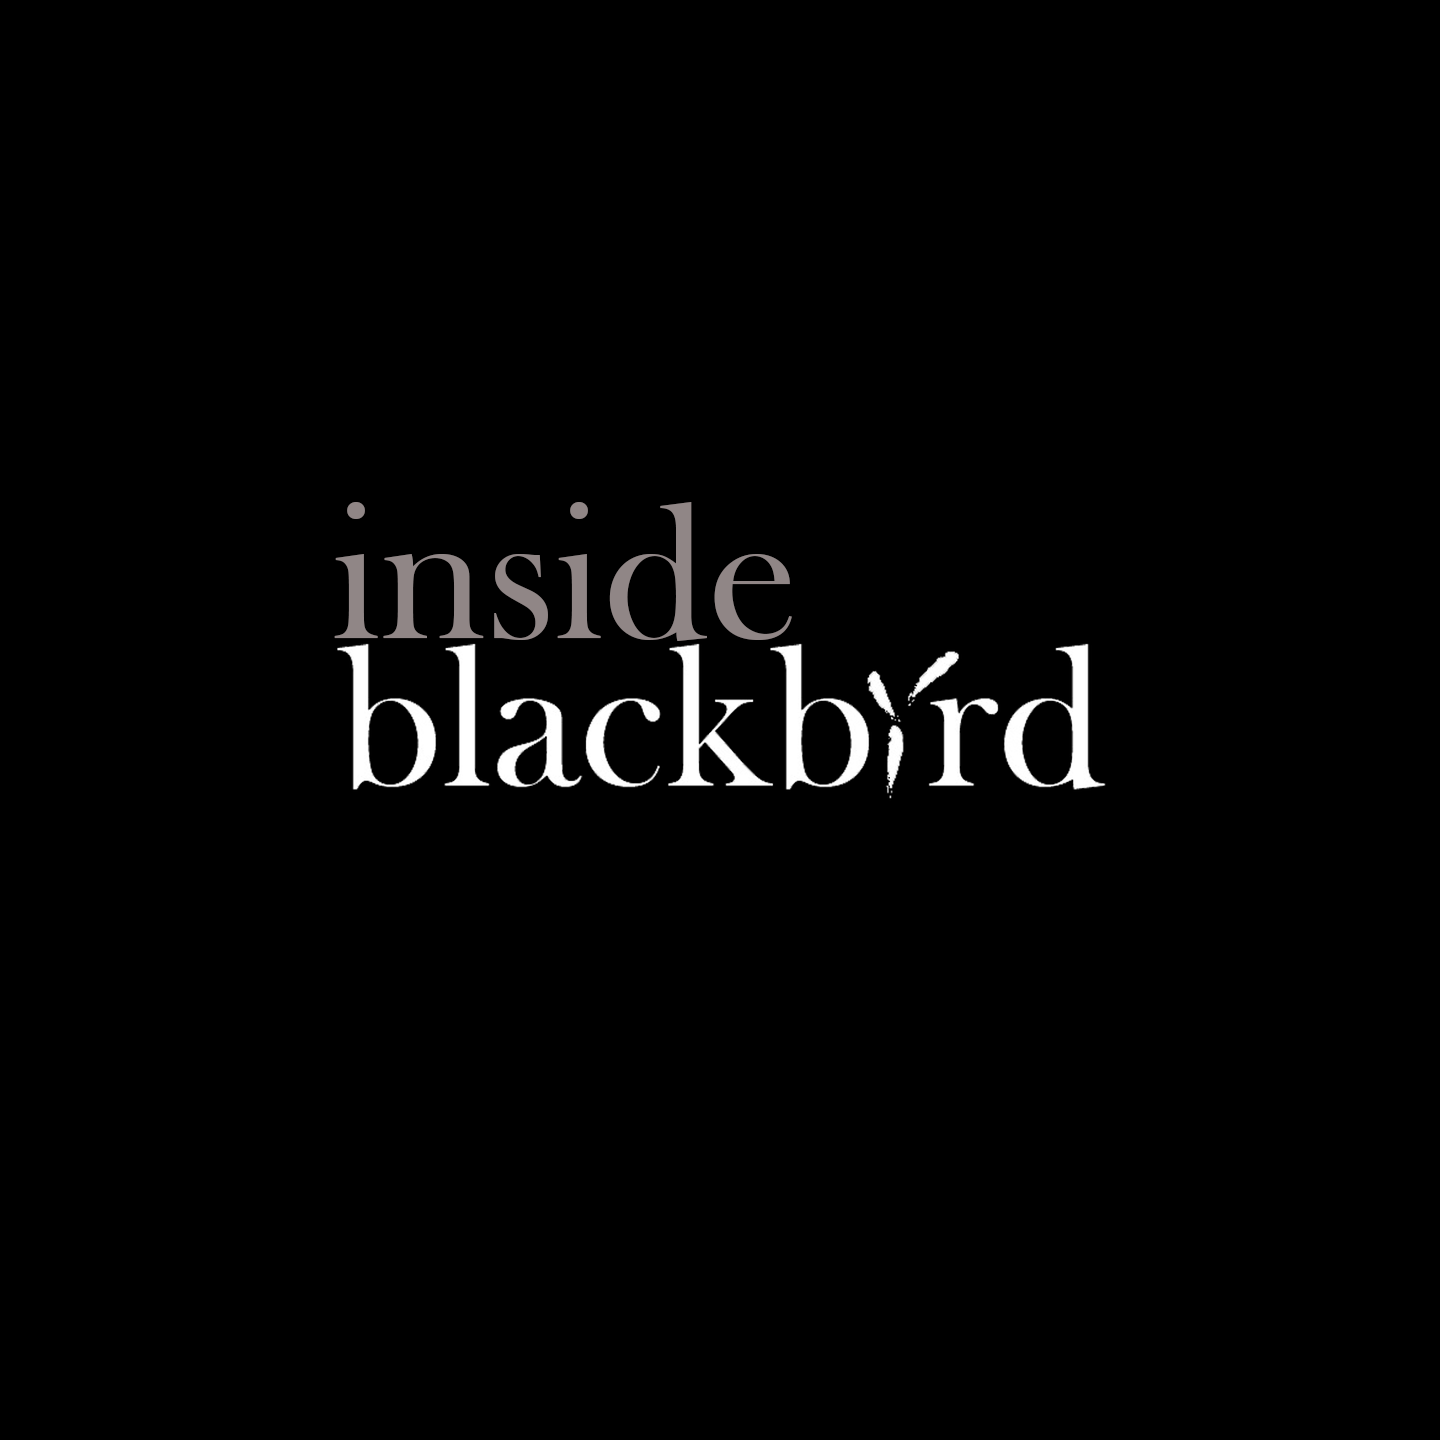 Blackbird Studios